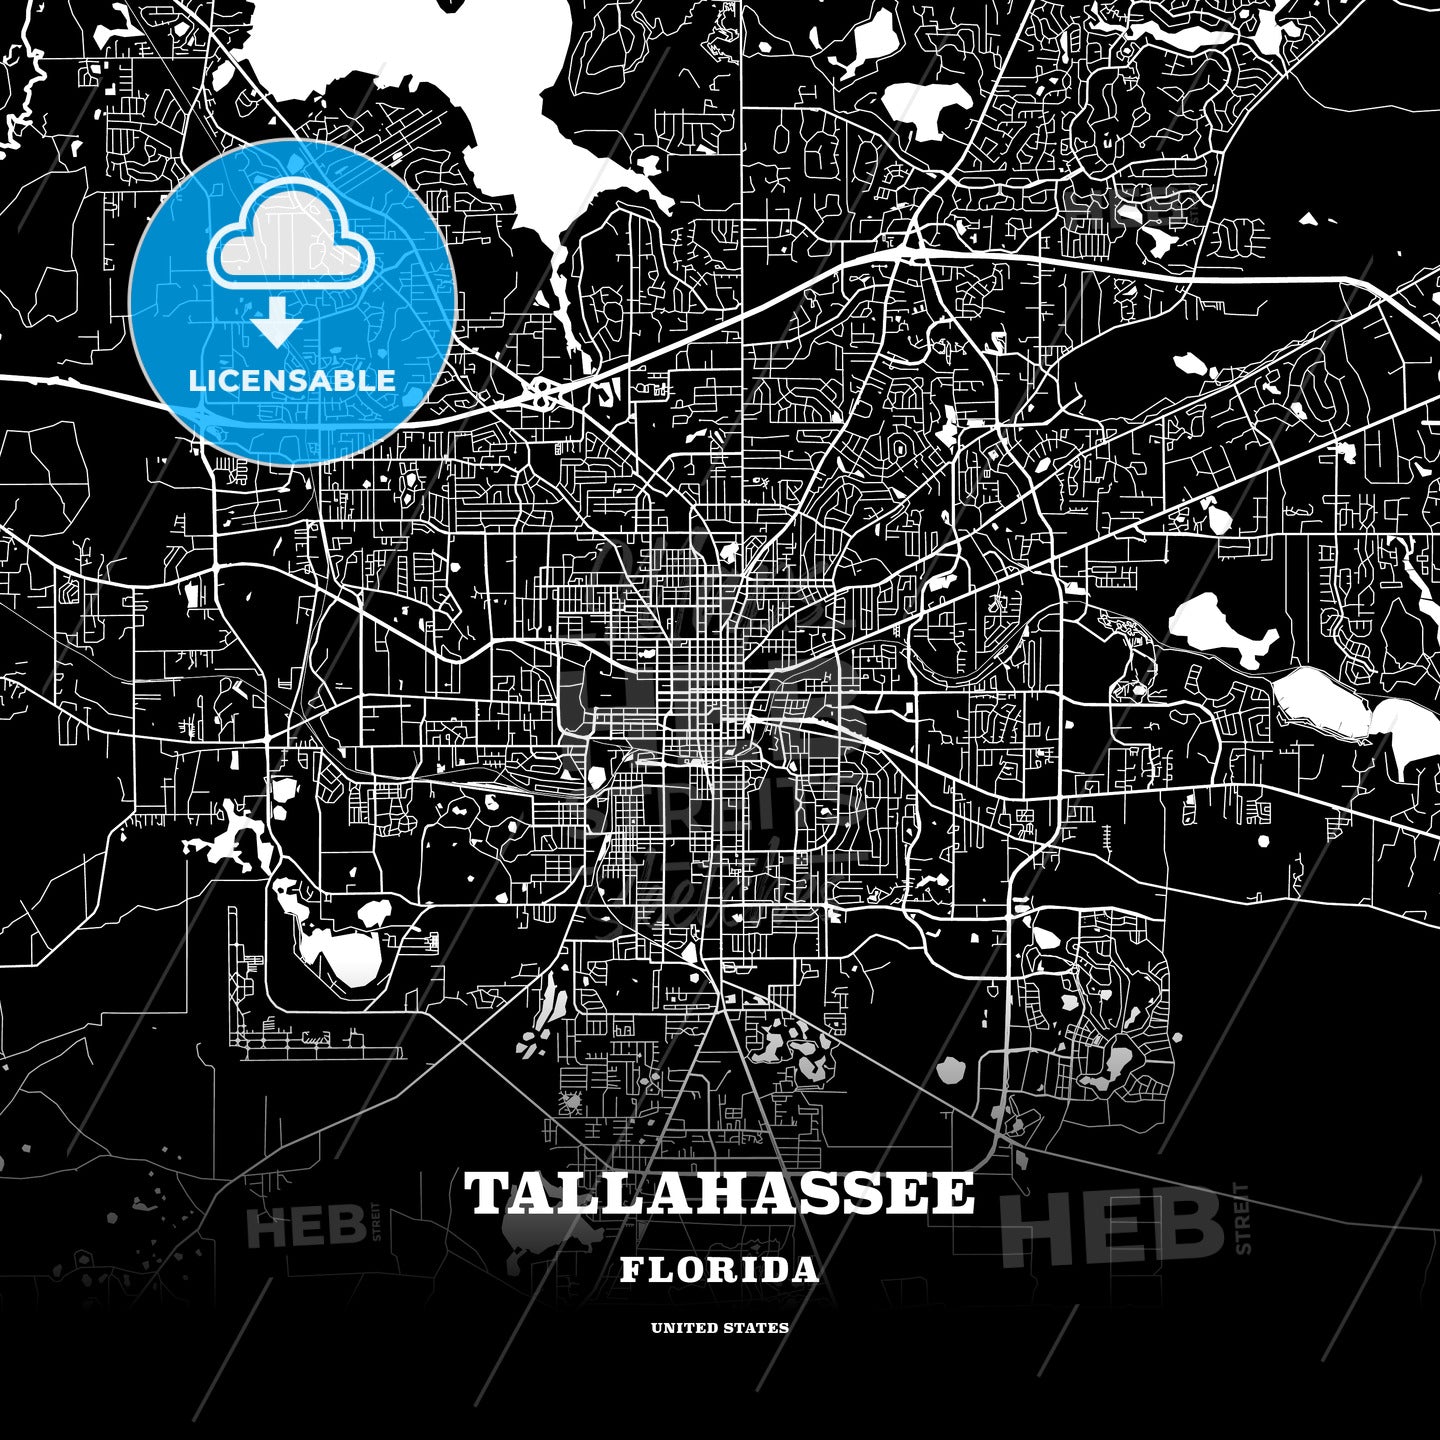 Tallahassee, Florida, USA map